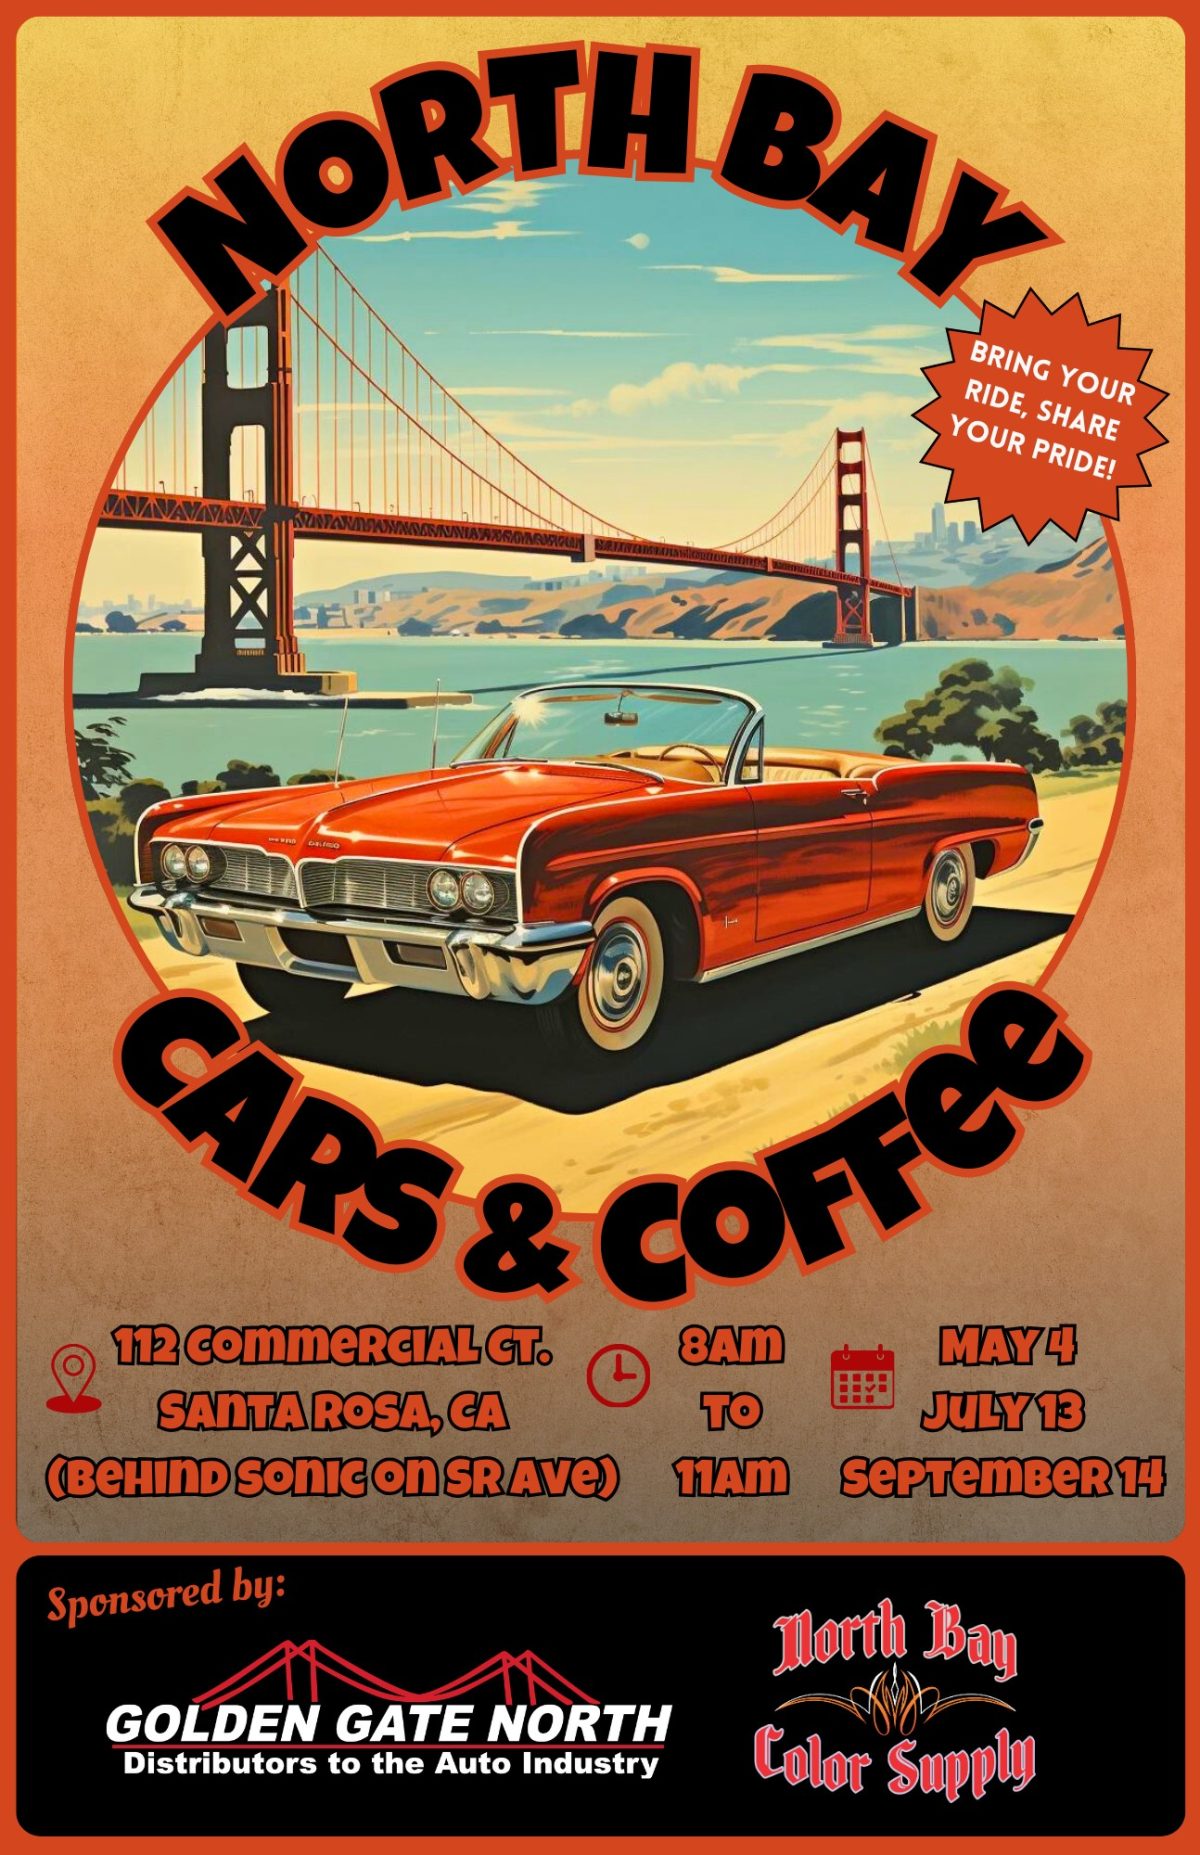 North Bay Cars & Coffee